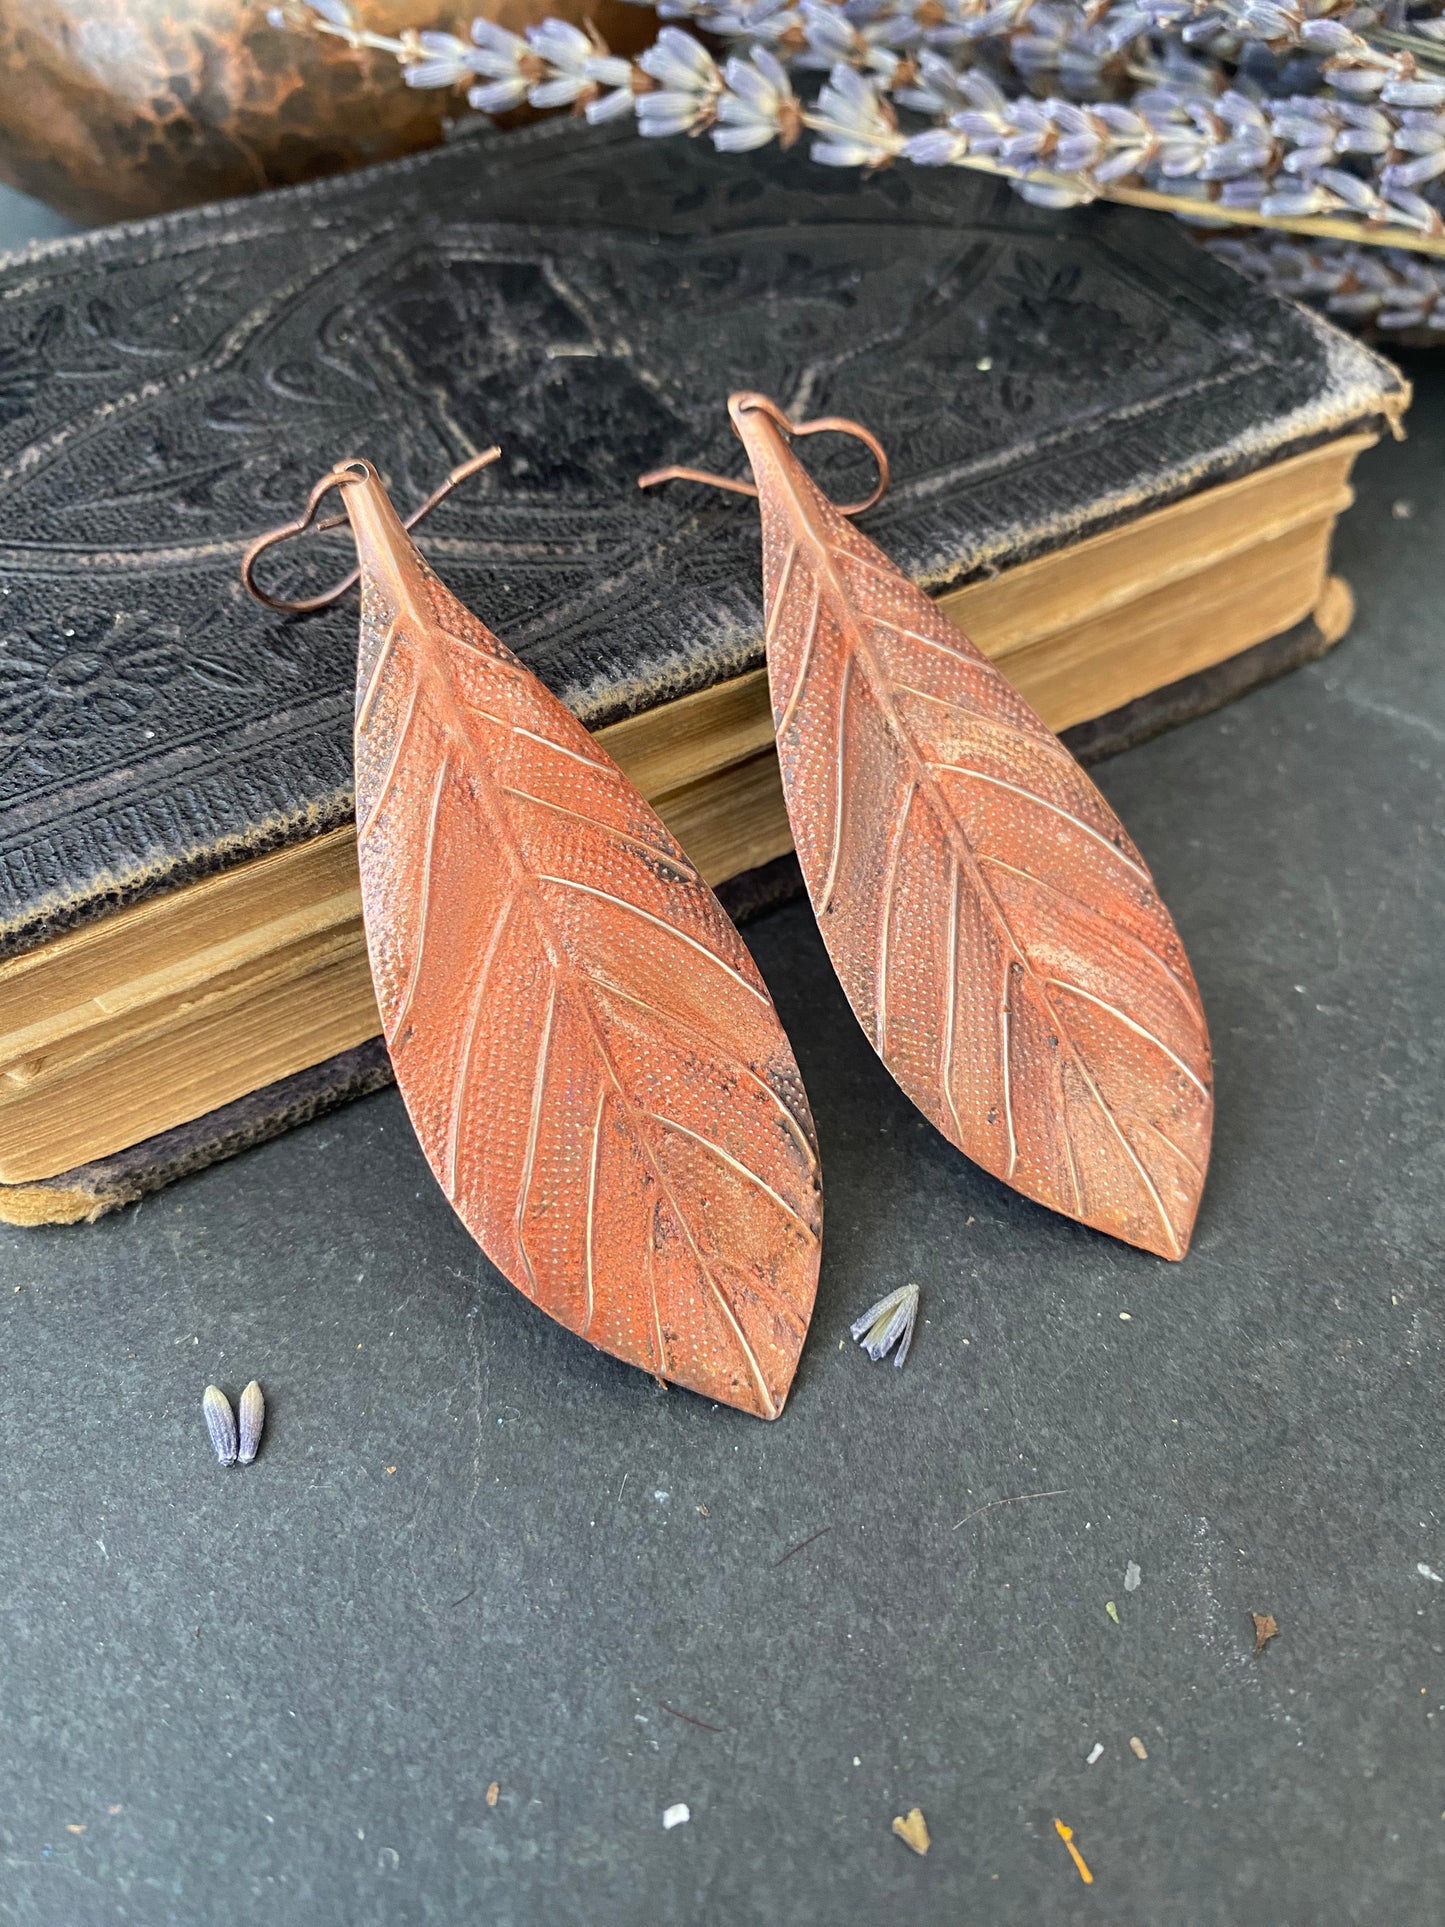 Orange and Copper leaves, boho, long drop, copper earrings